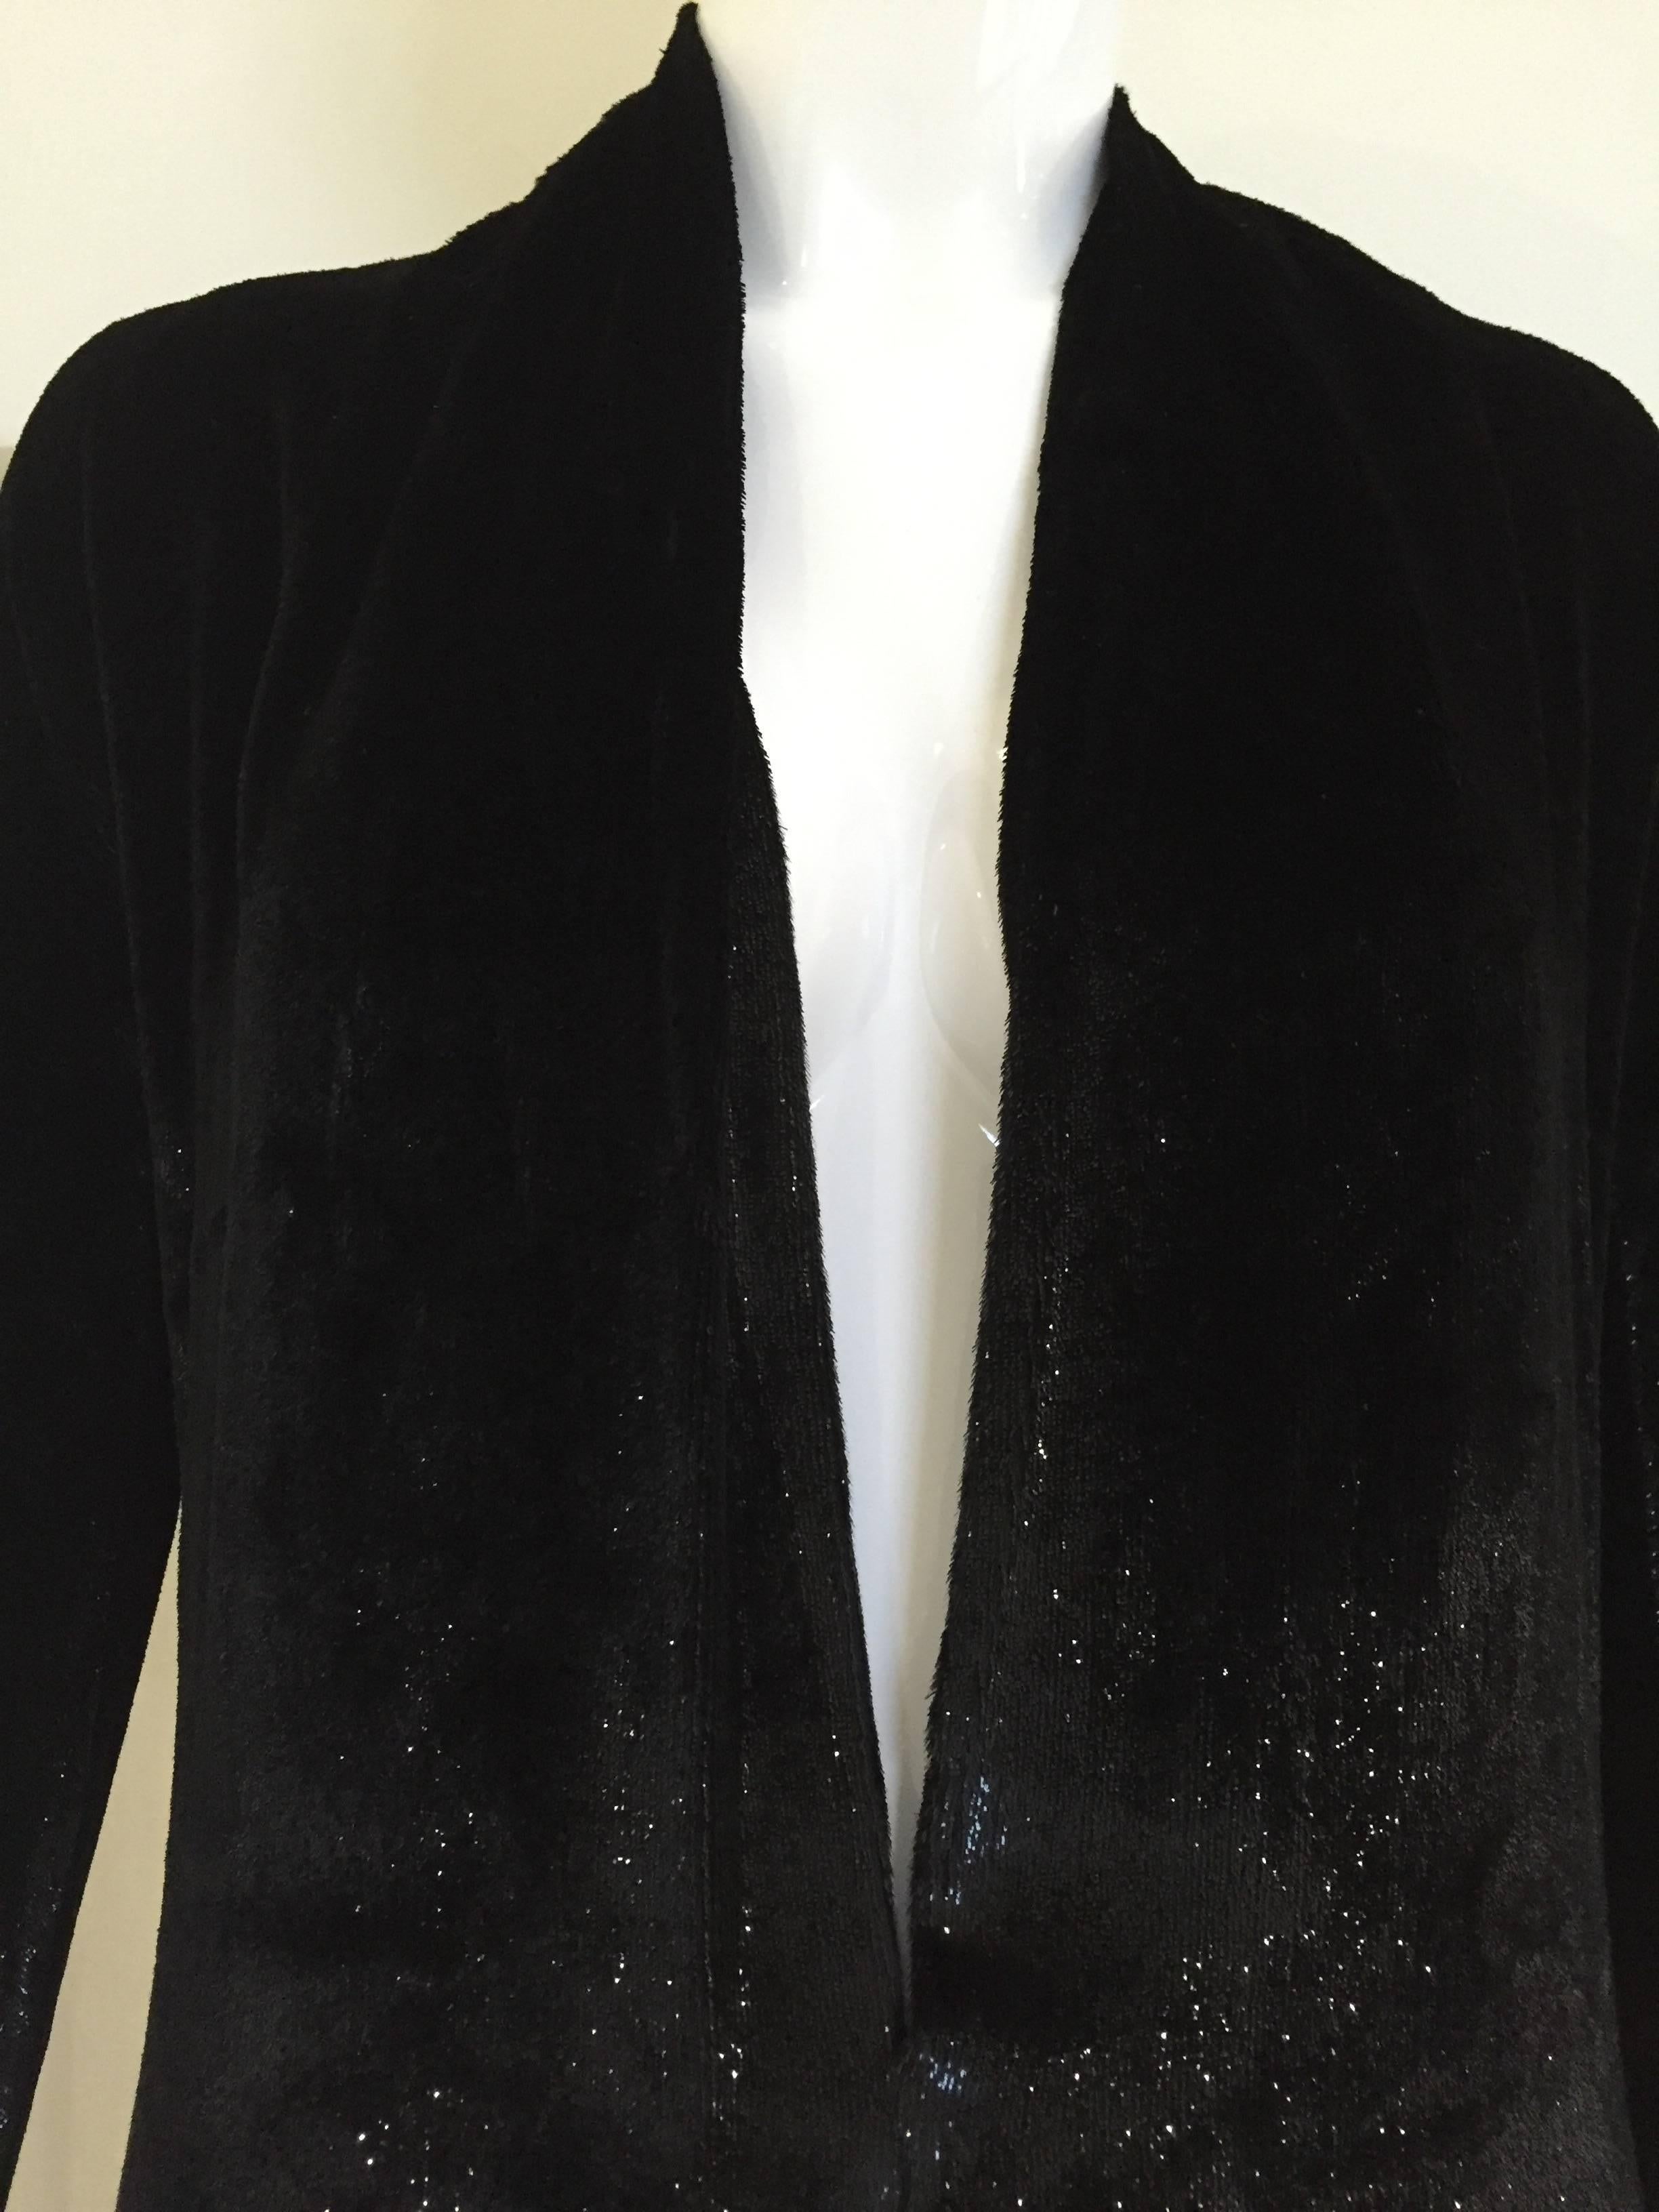 sexy Yves Saint Laurent by Tom ford black silk velvet low cut dress.
size: 4